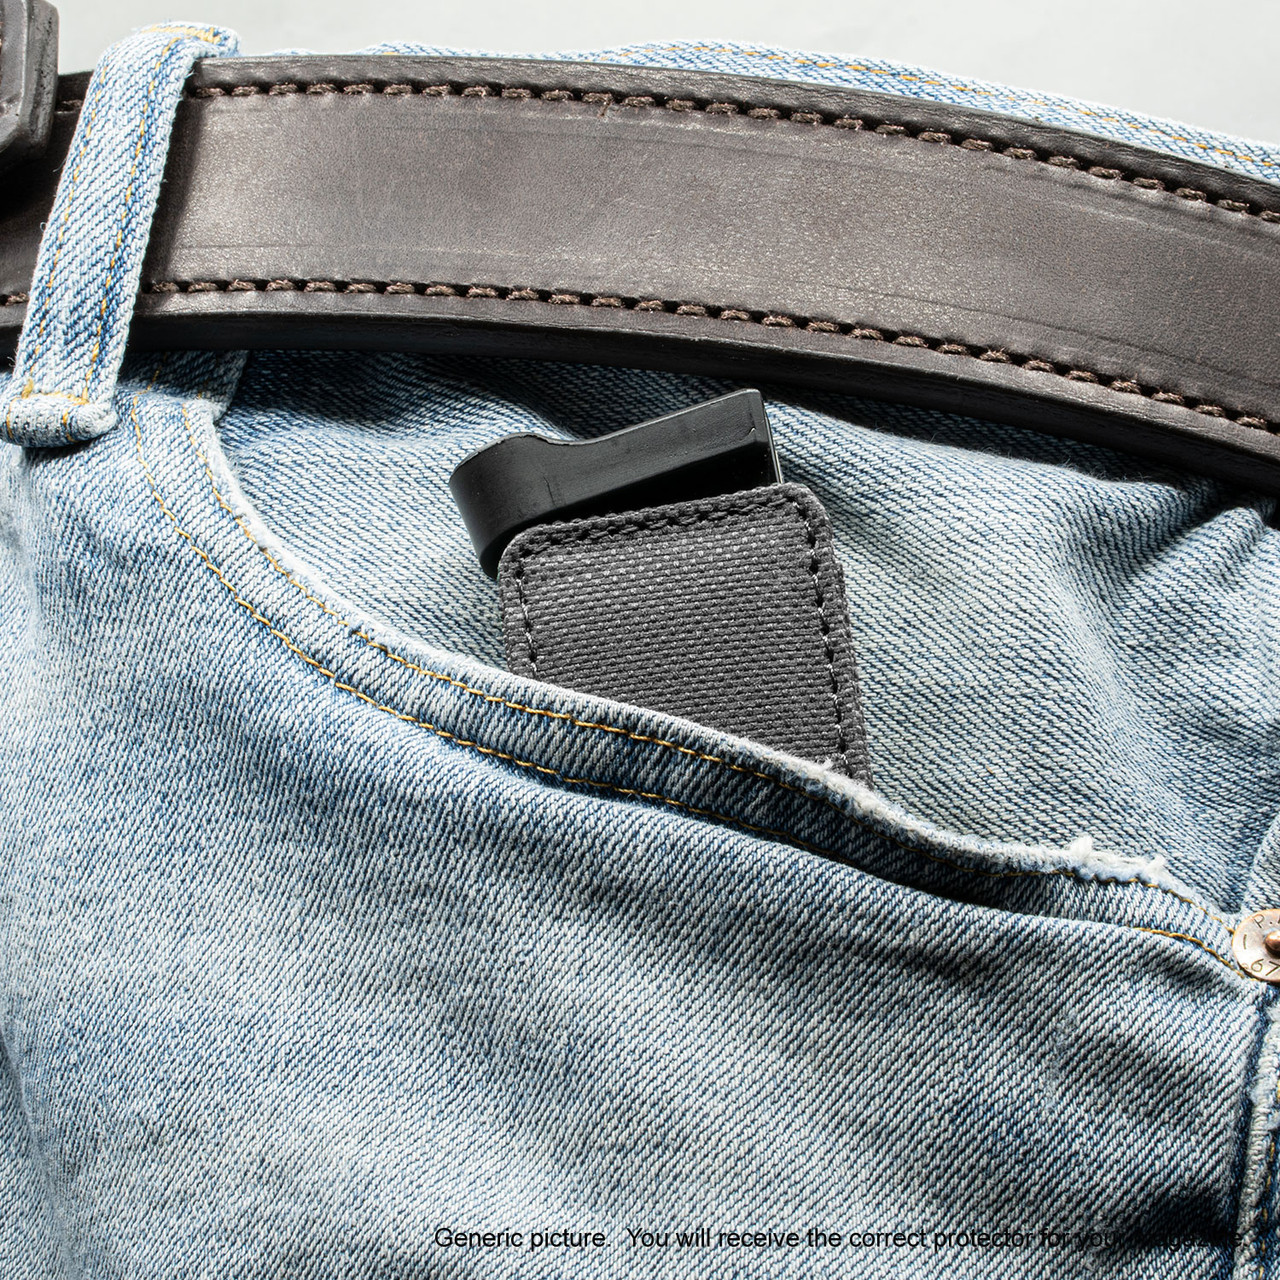 M&P Shield .40 Grey Covert Magazine Pocket Protector